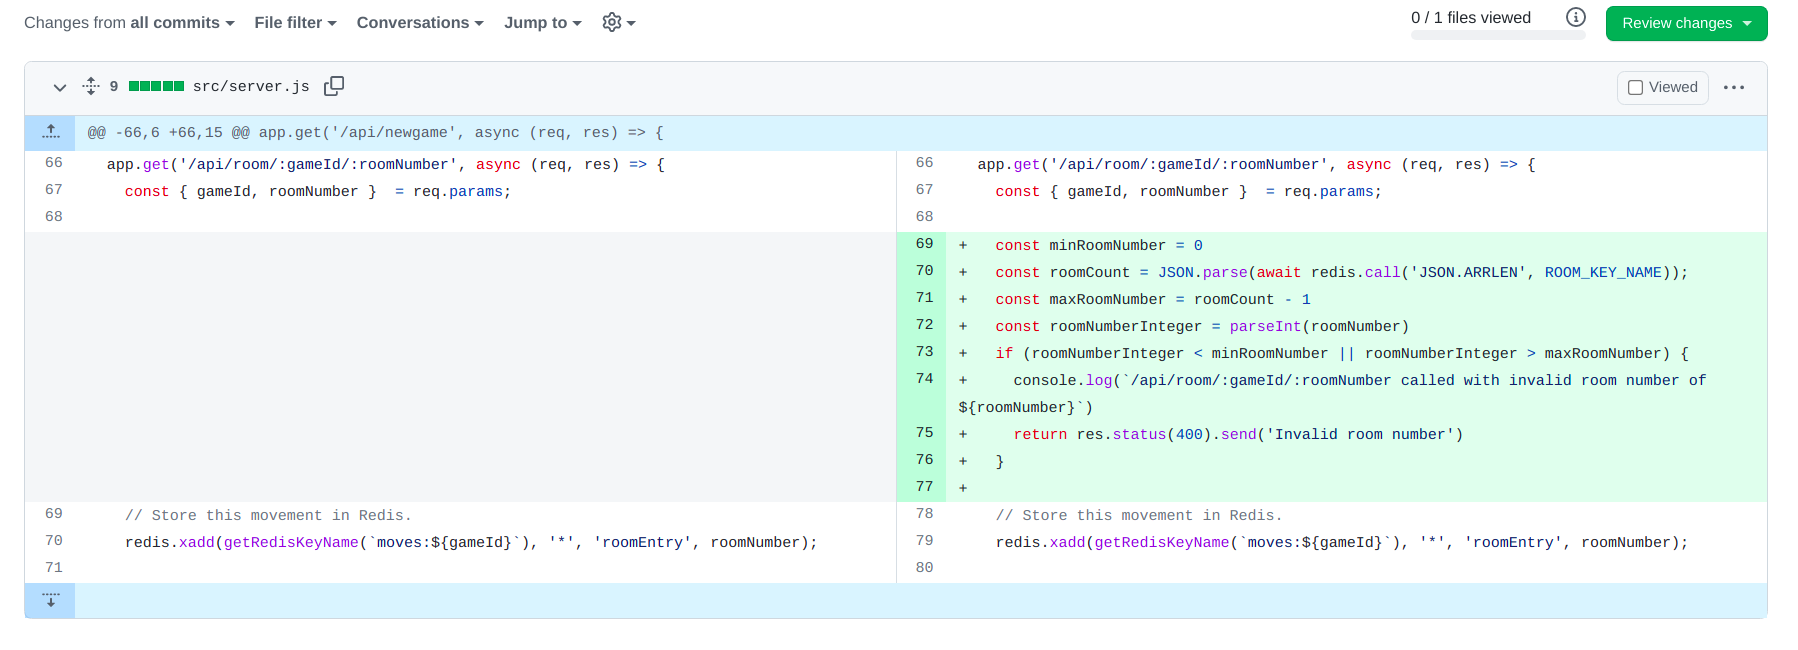 Screenshot of code changes in GitHub PR